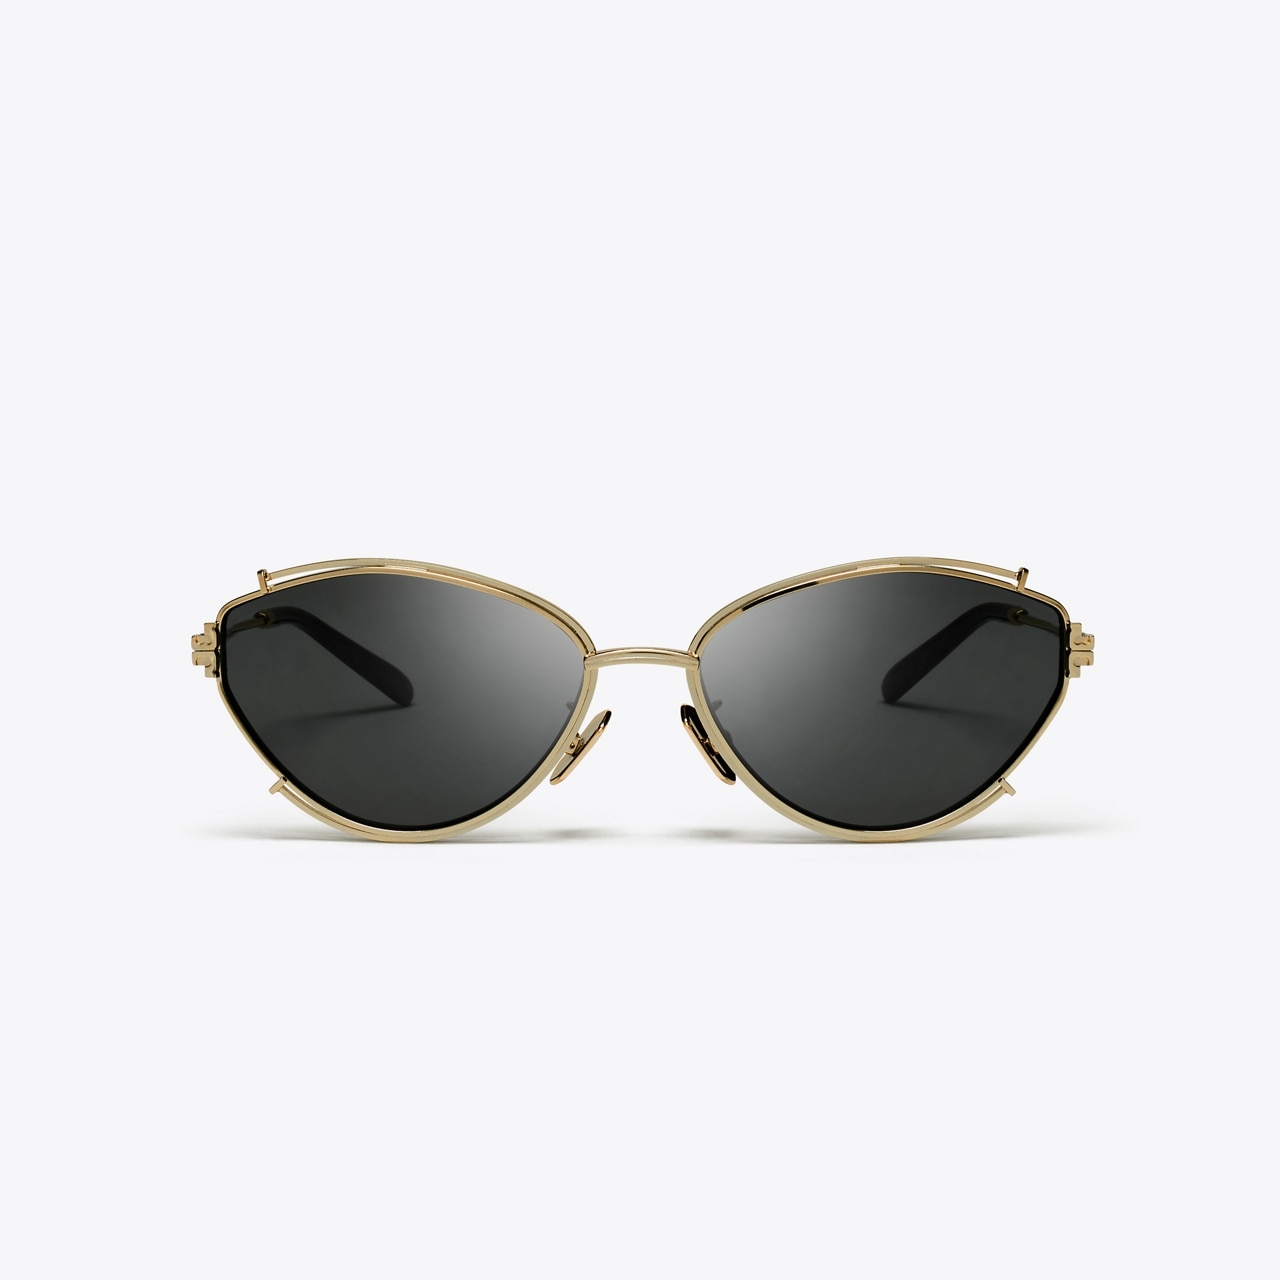 oval chanel sunglasses